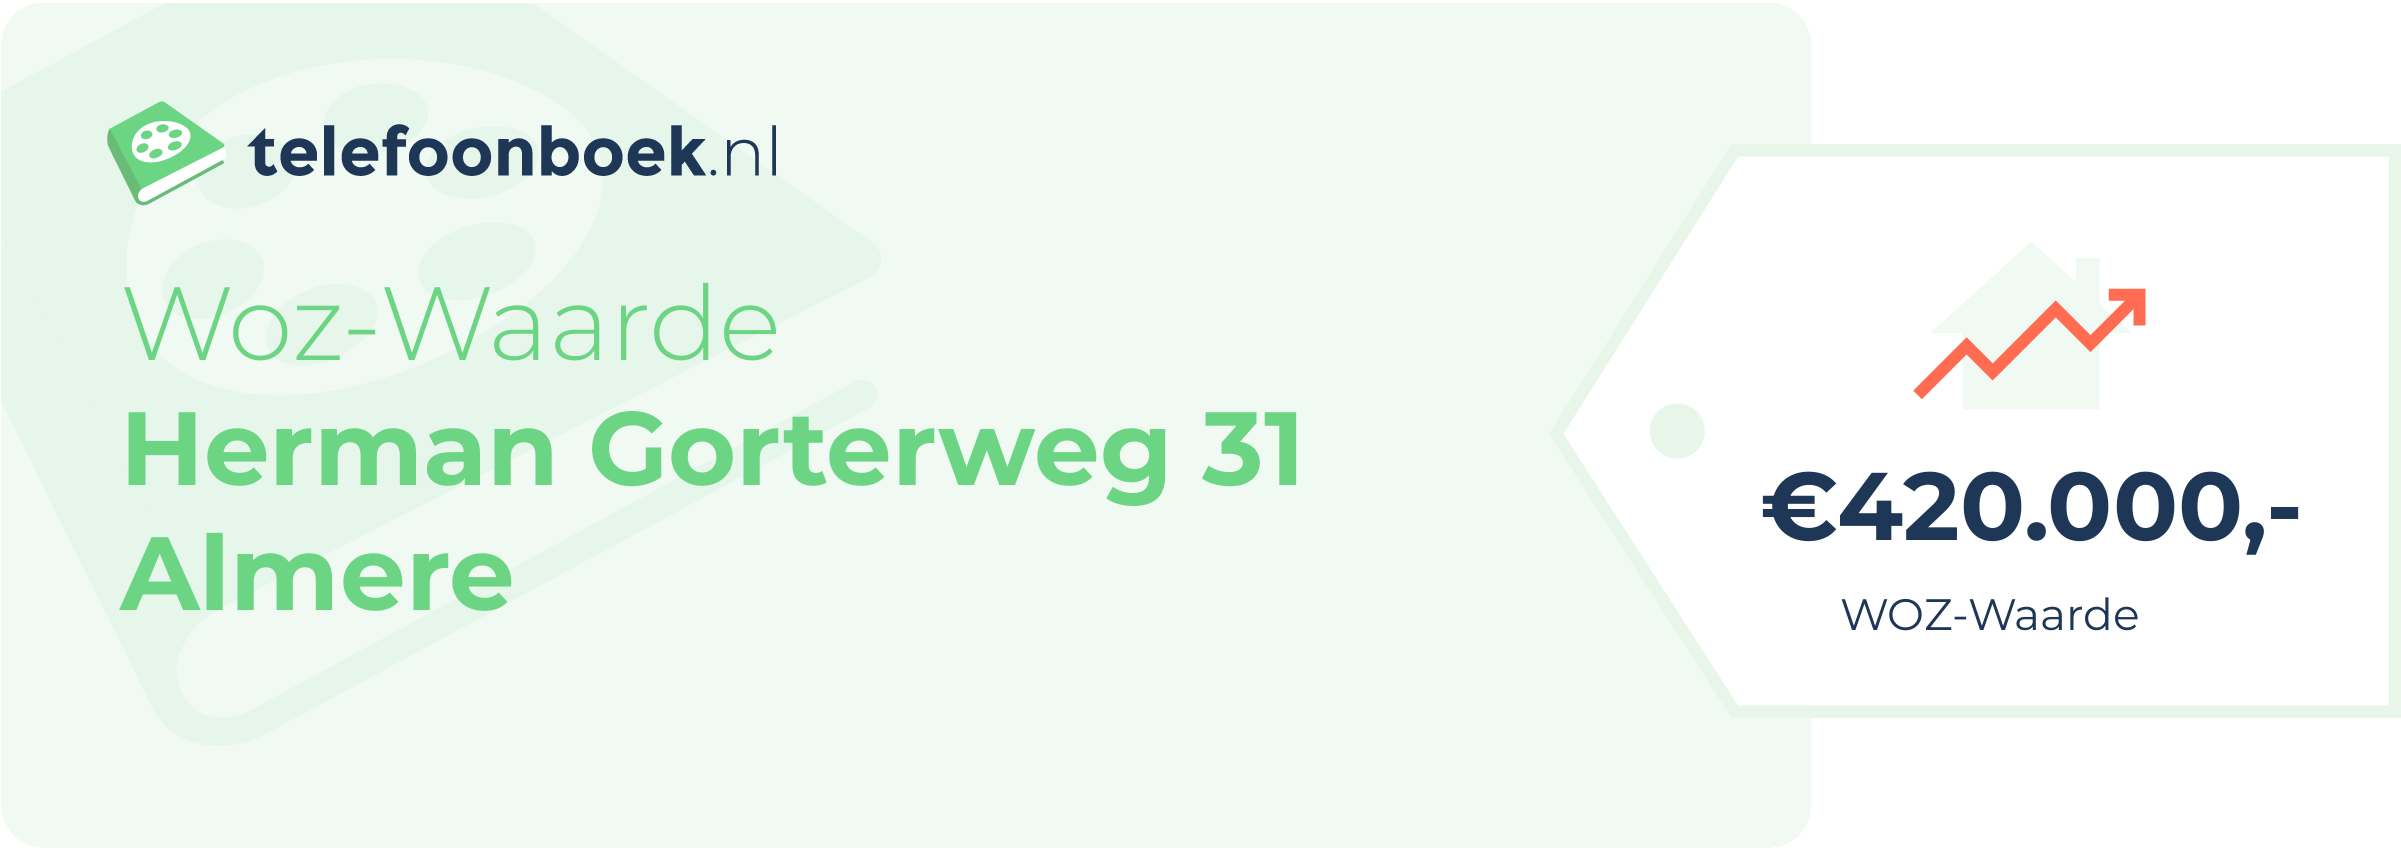 WOZ-waarde Herman Gorterweg 31 Almere